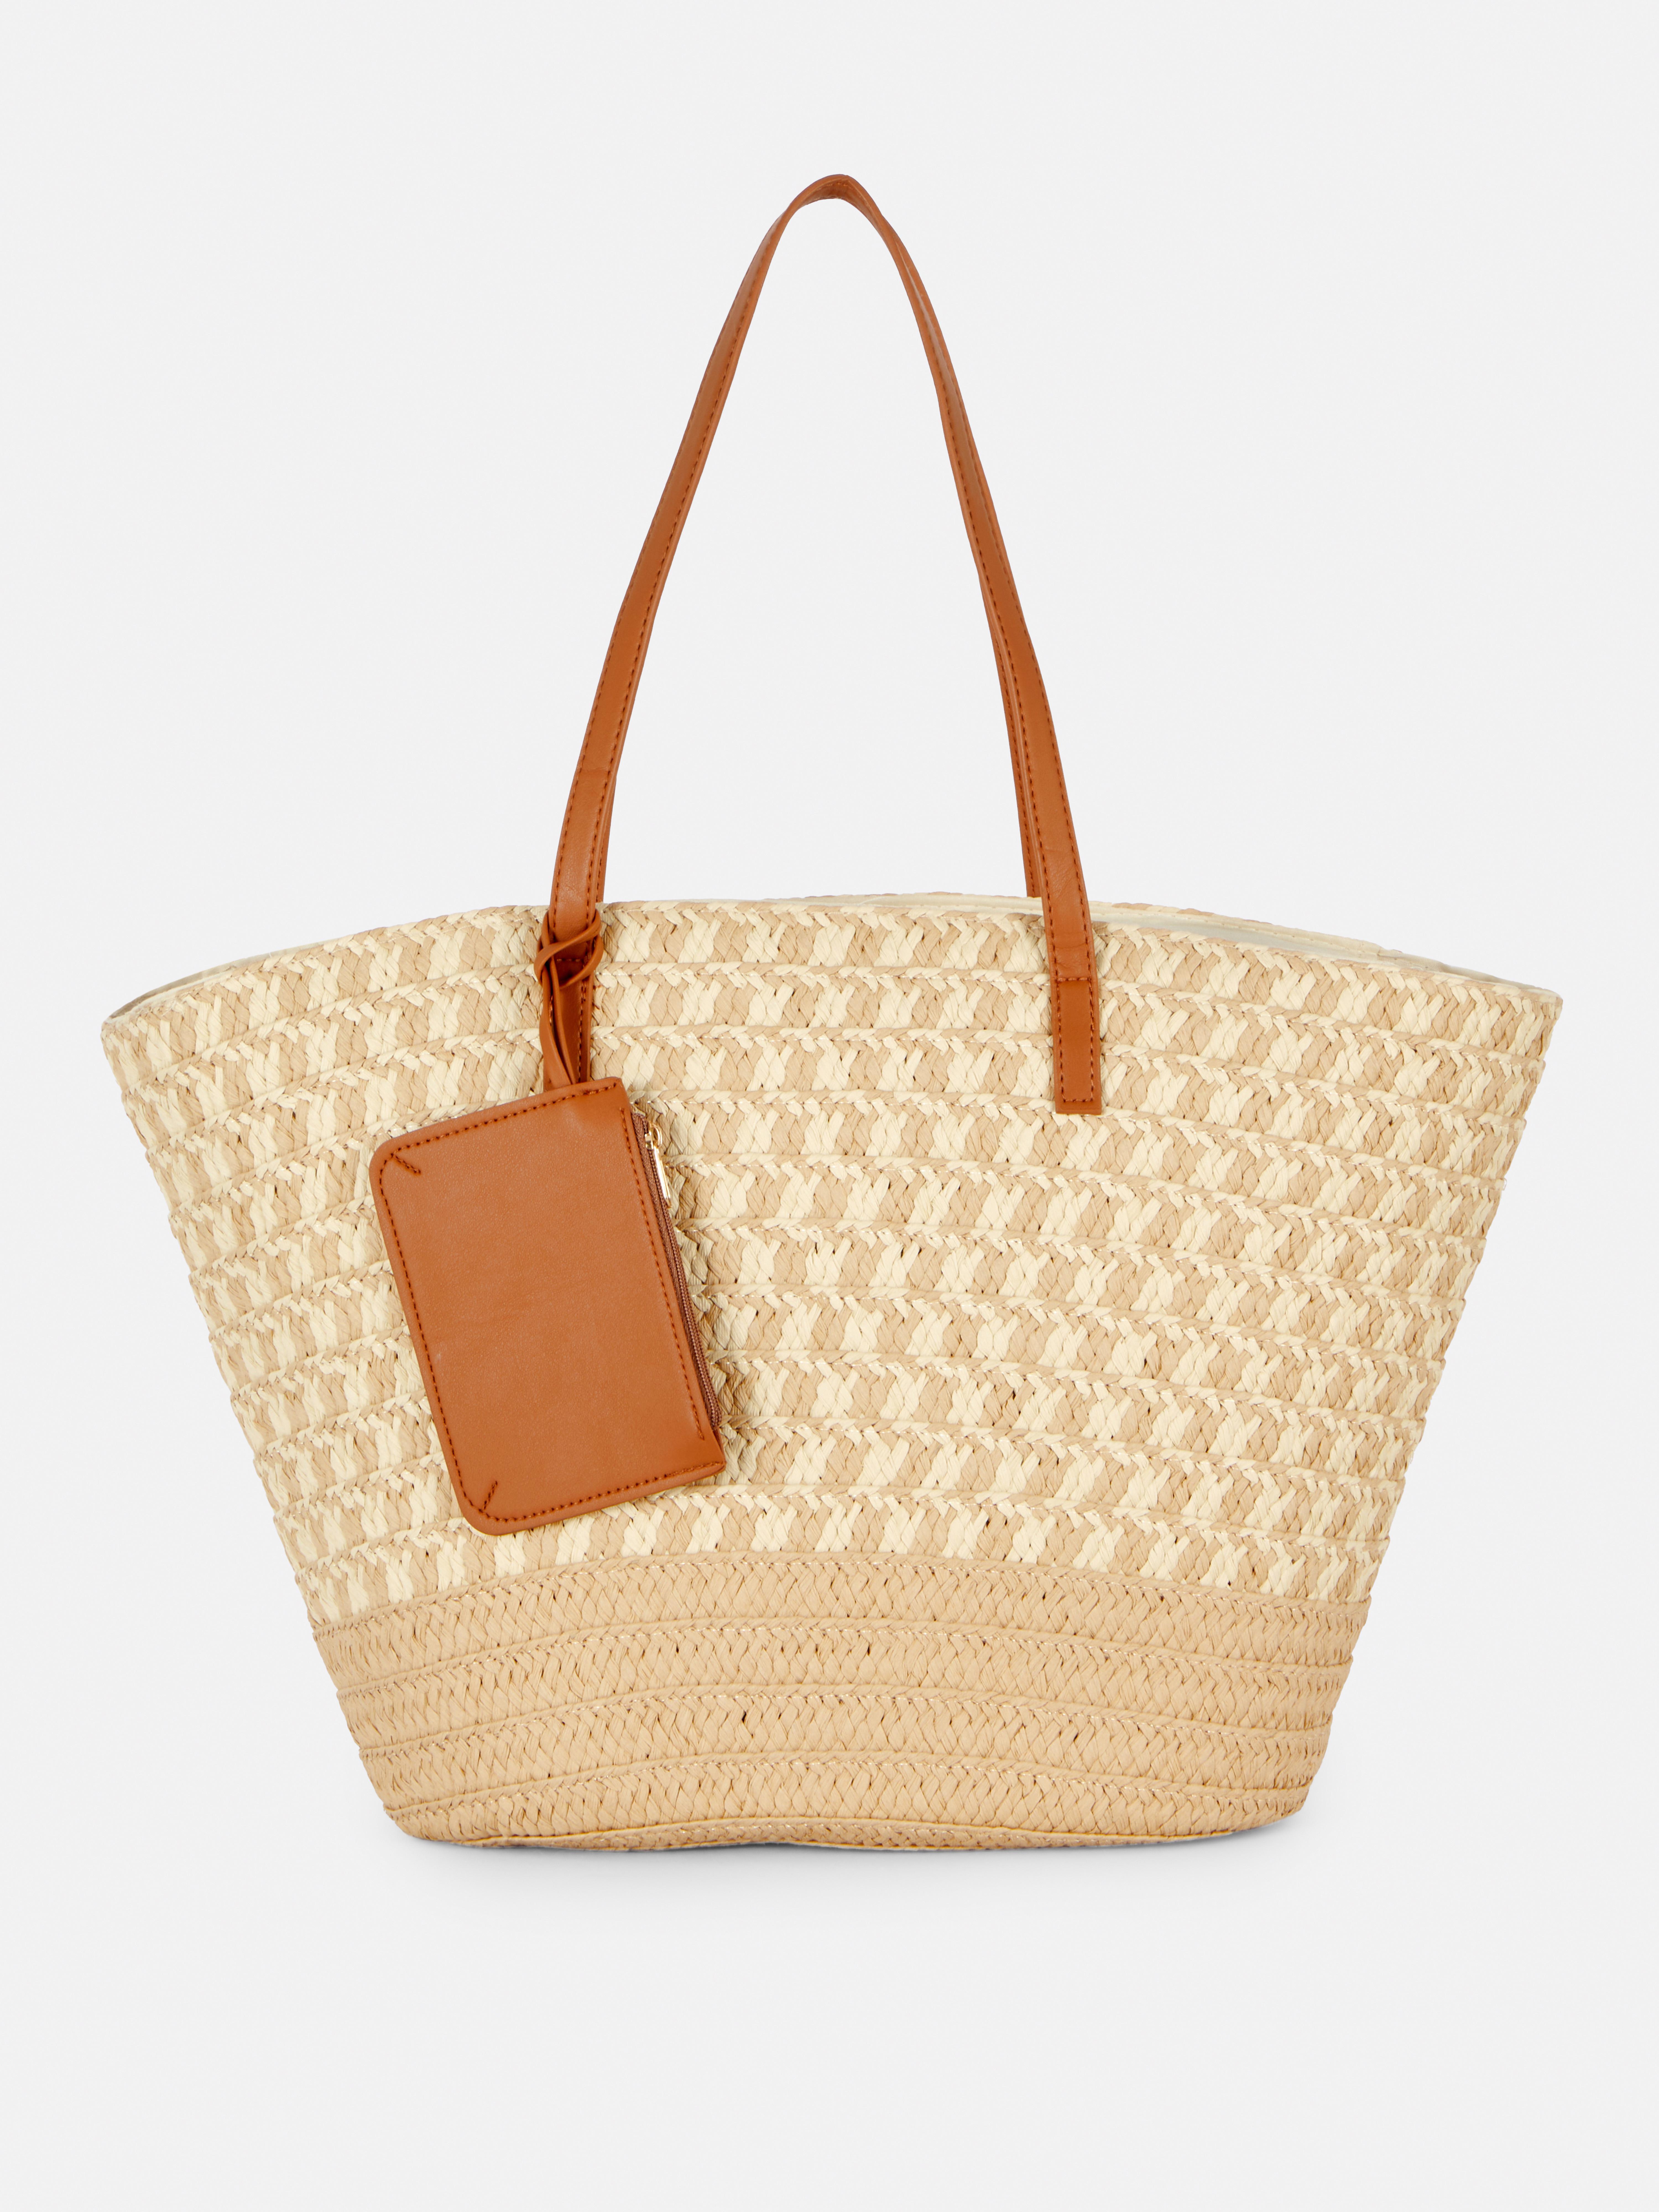 Handbags | Purses & Bum | Bags for Women | Primark USA